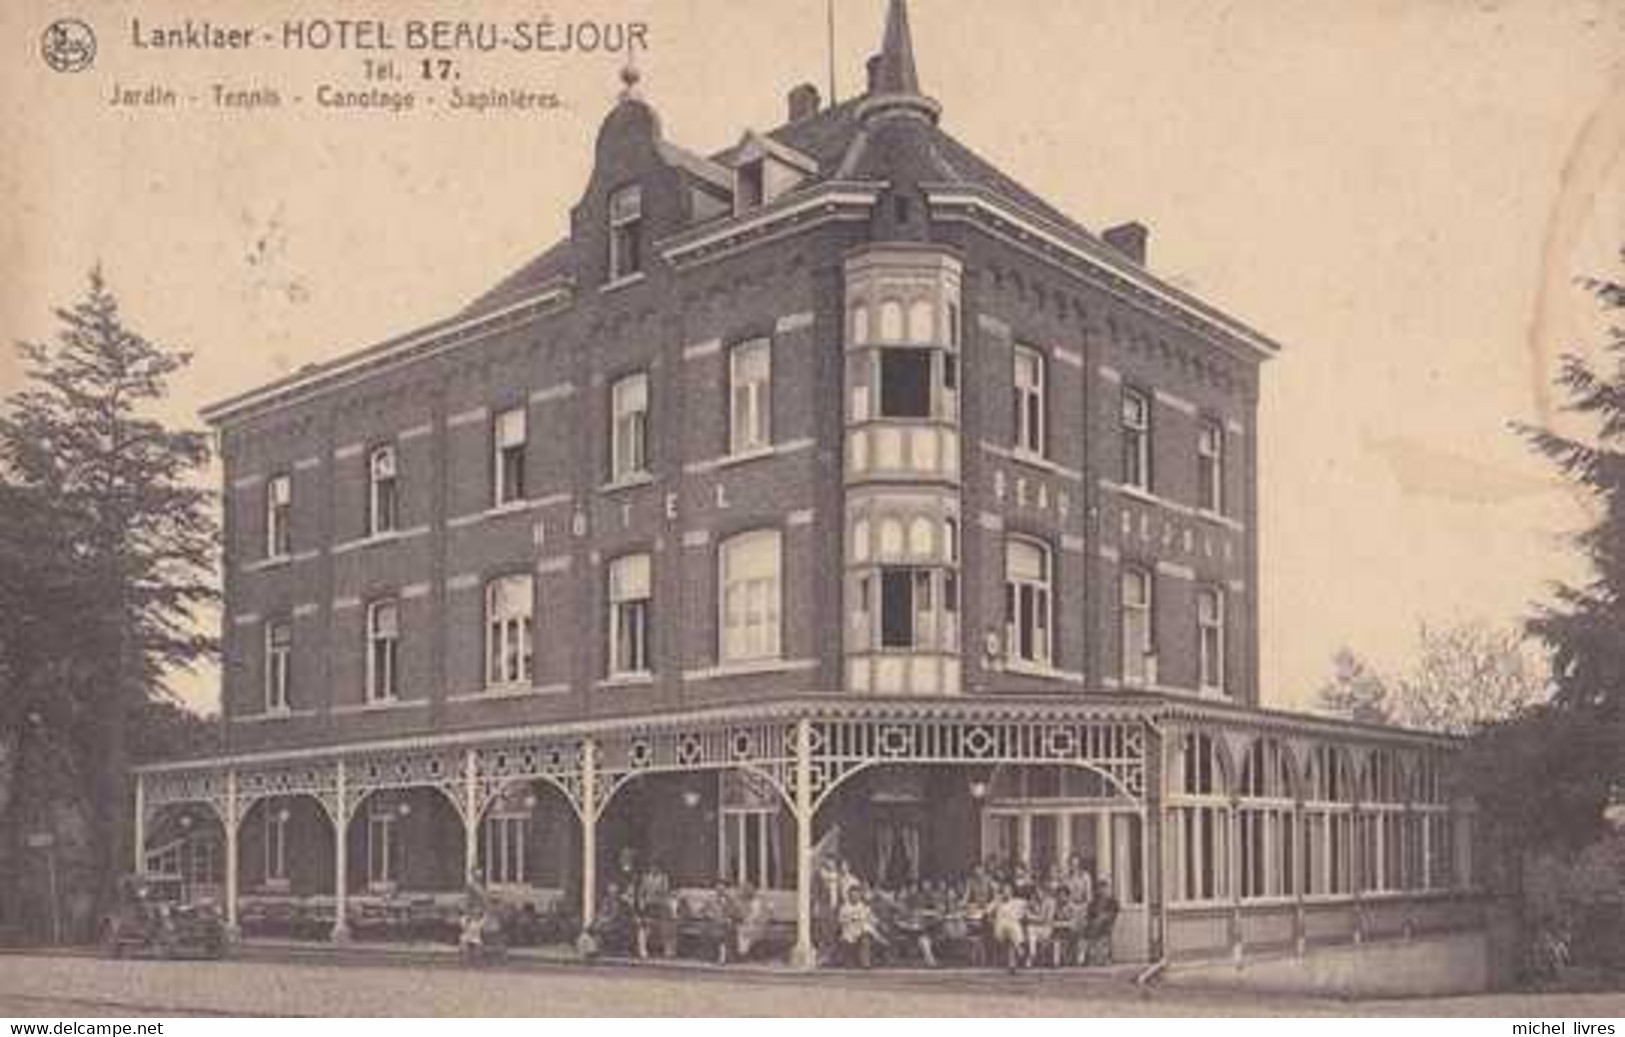 Lanklaar - Lanklaer - Dilsen-Stokkem - Hôtel Beau Séjour - Circulé En 1930 - Animée - TBE - Limburg - Dilsen-Stokkem